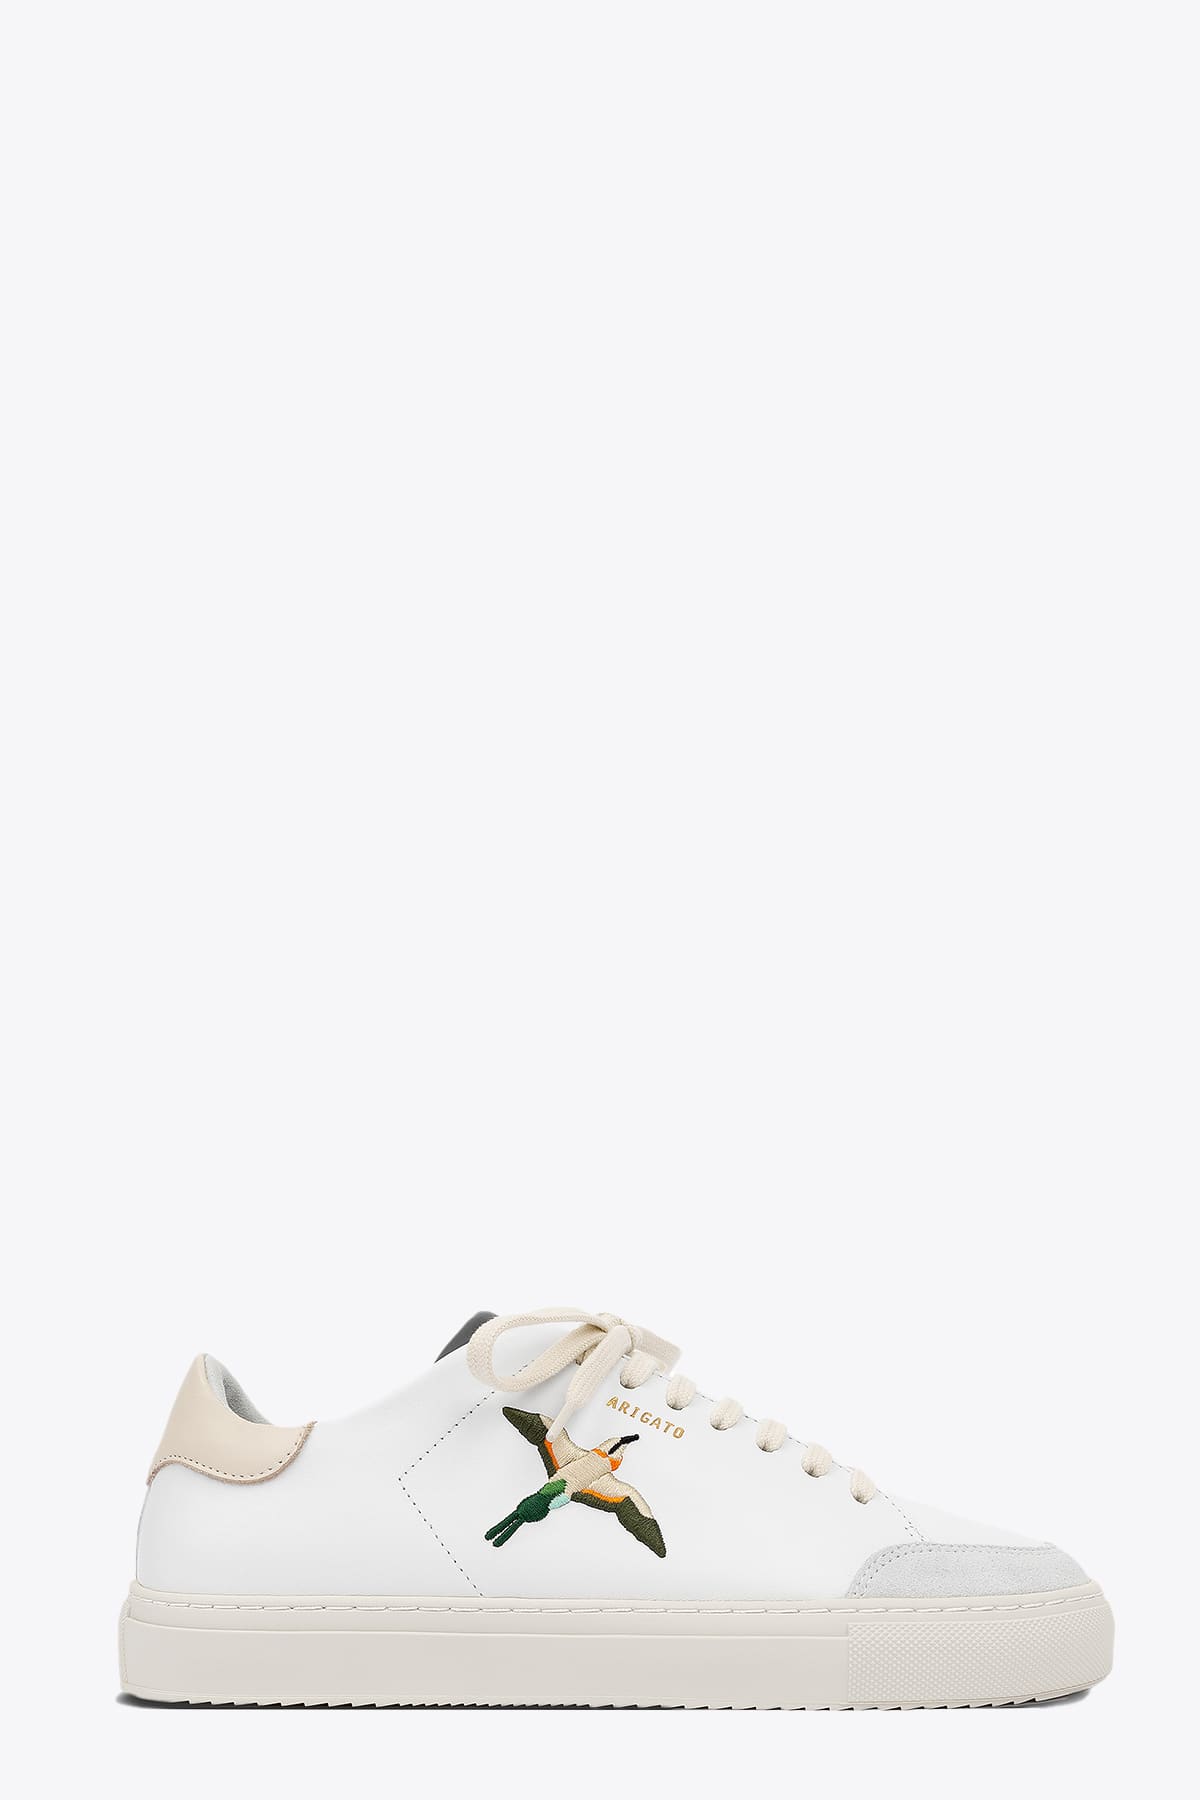 Axel Arigato Clean 90 Bird Sneakers White leather sneaker with bird embroidery - Clean 90 Bird Sneakers